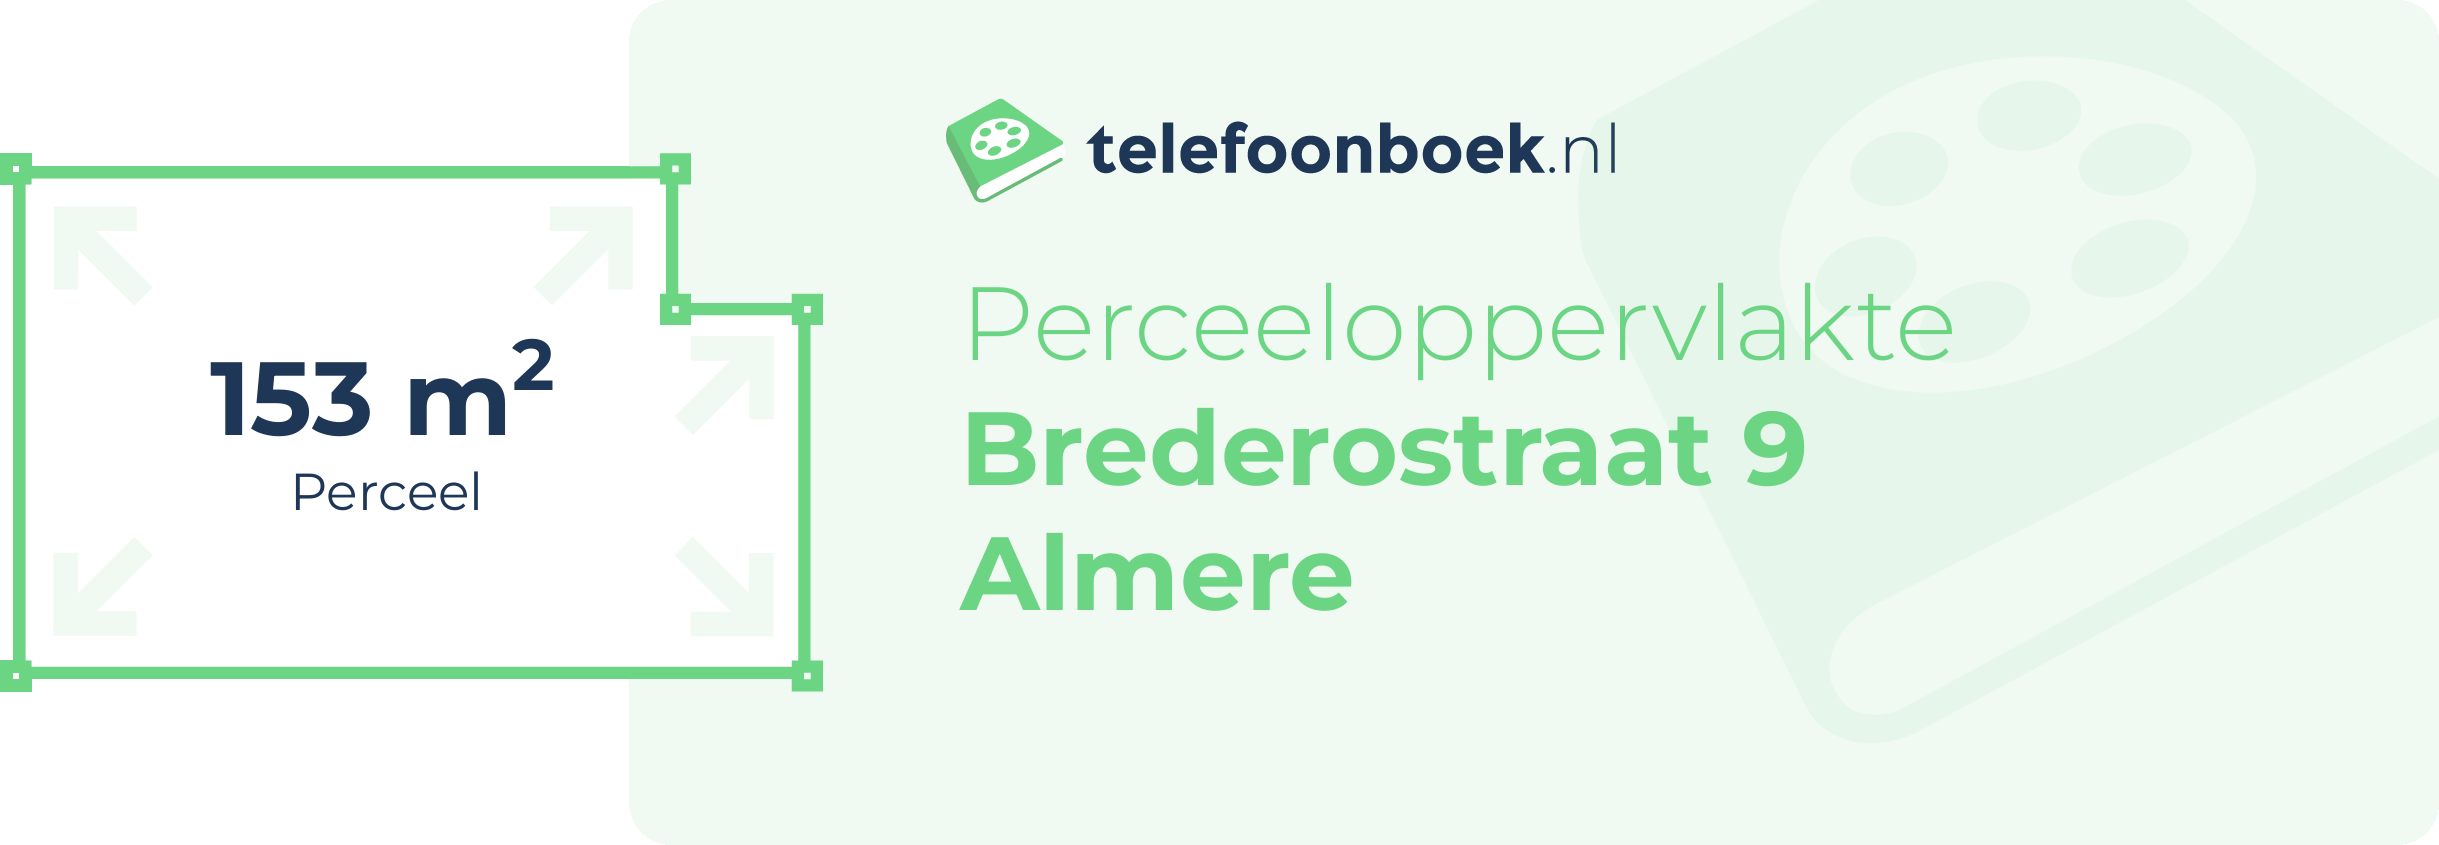 Perceeloppervlakte Brederostraat 9 Almere